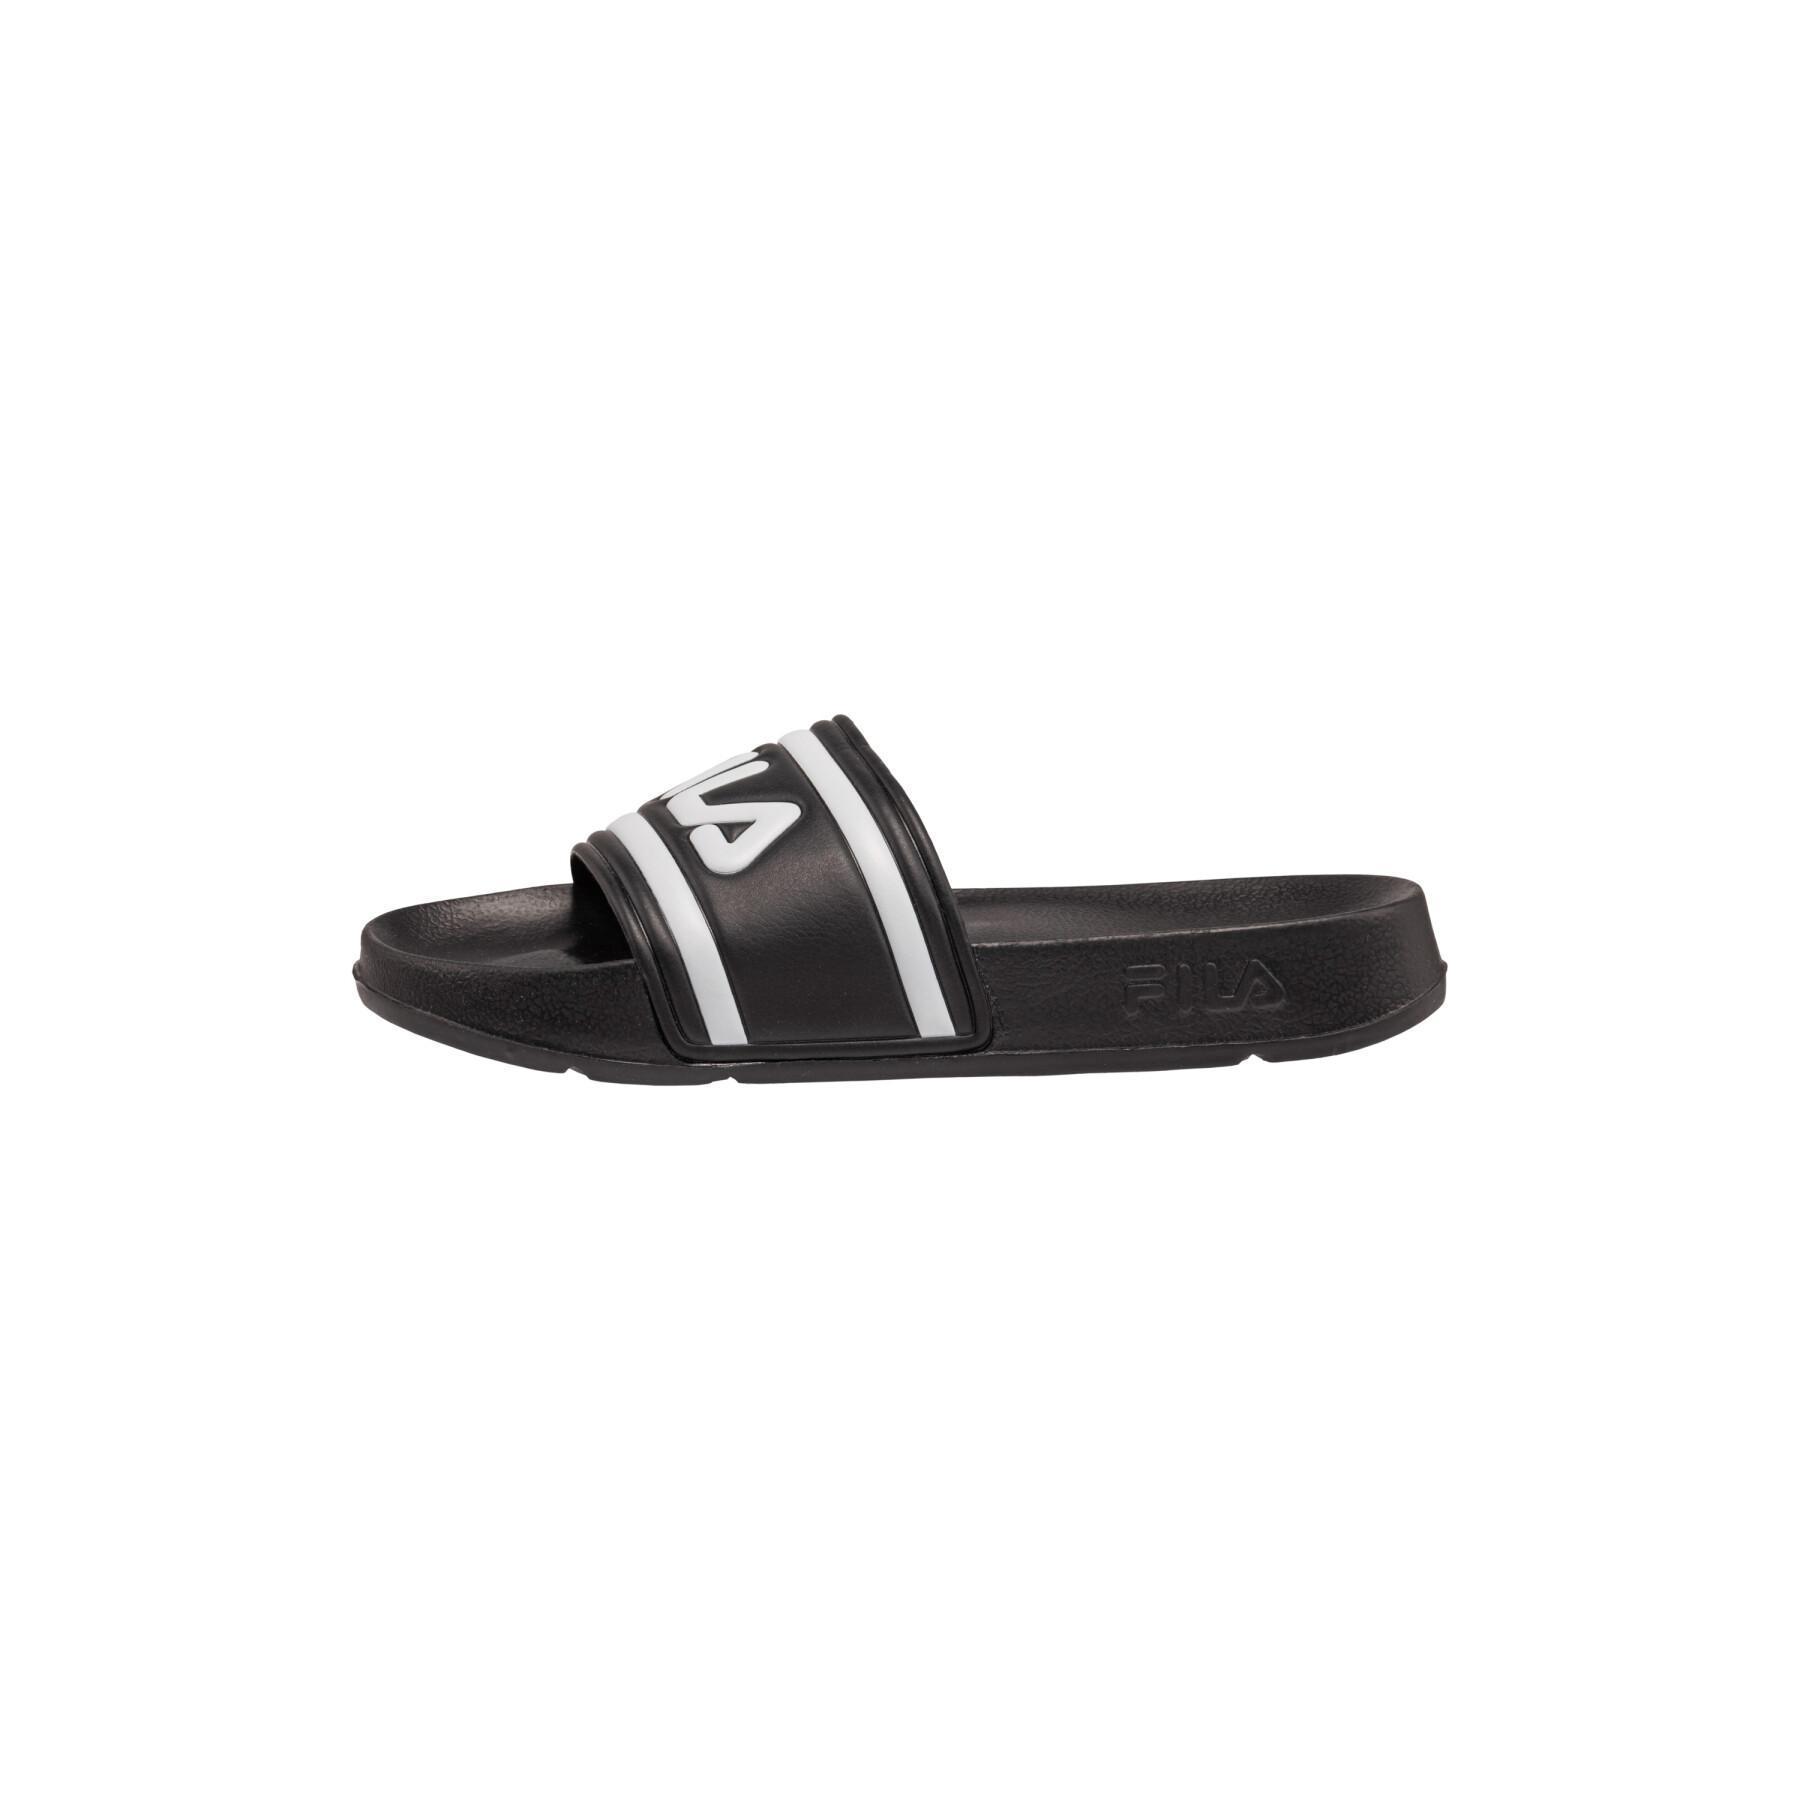 Fila Disruptor Strap Men's Sandals Black-White 1sm00069-013 - Walmart.com